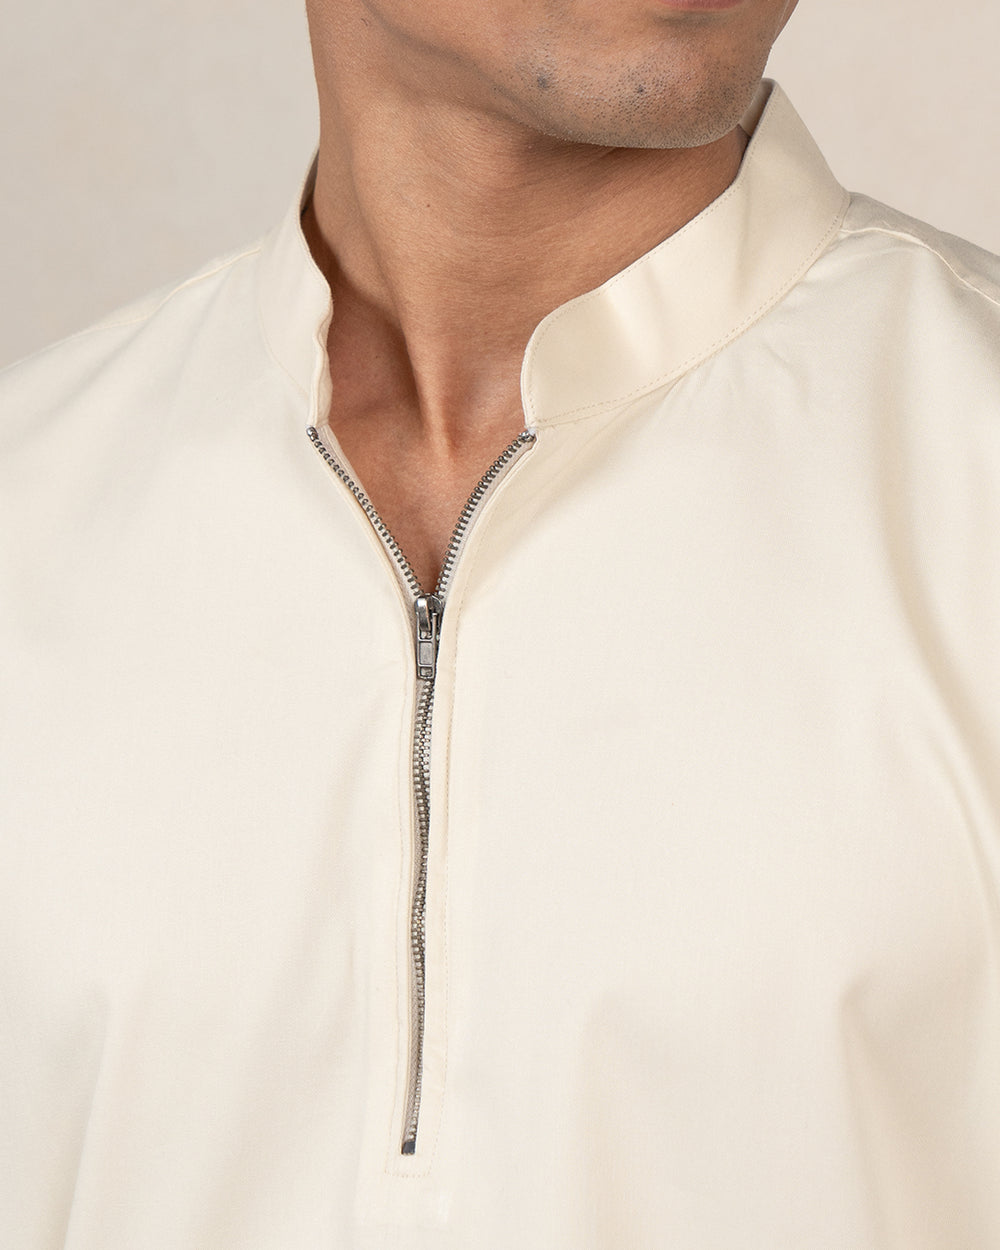 Modern stylish off white zipper front shirt for men, Stylish and functional zipper front shirt for men, combining modern design with comfort